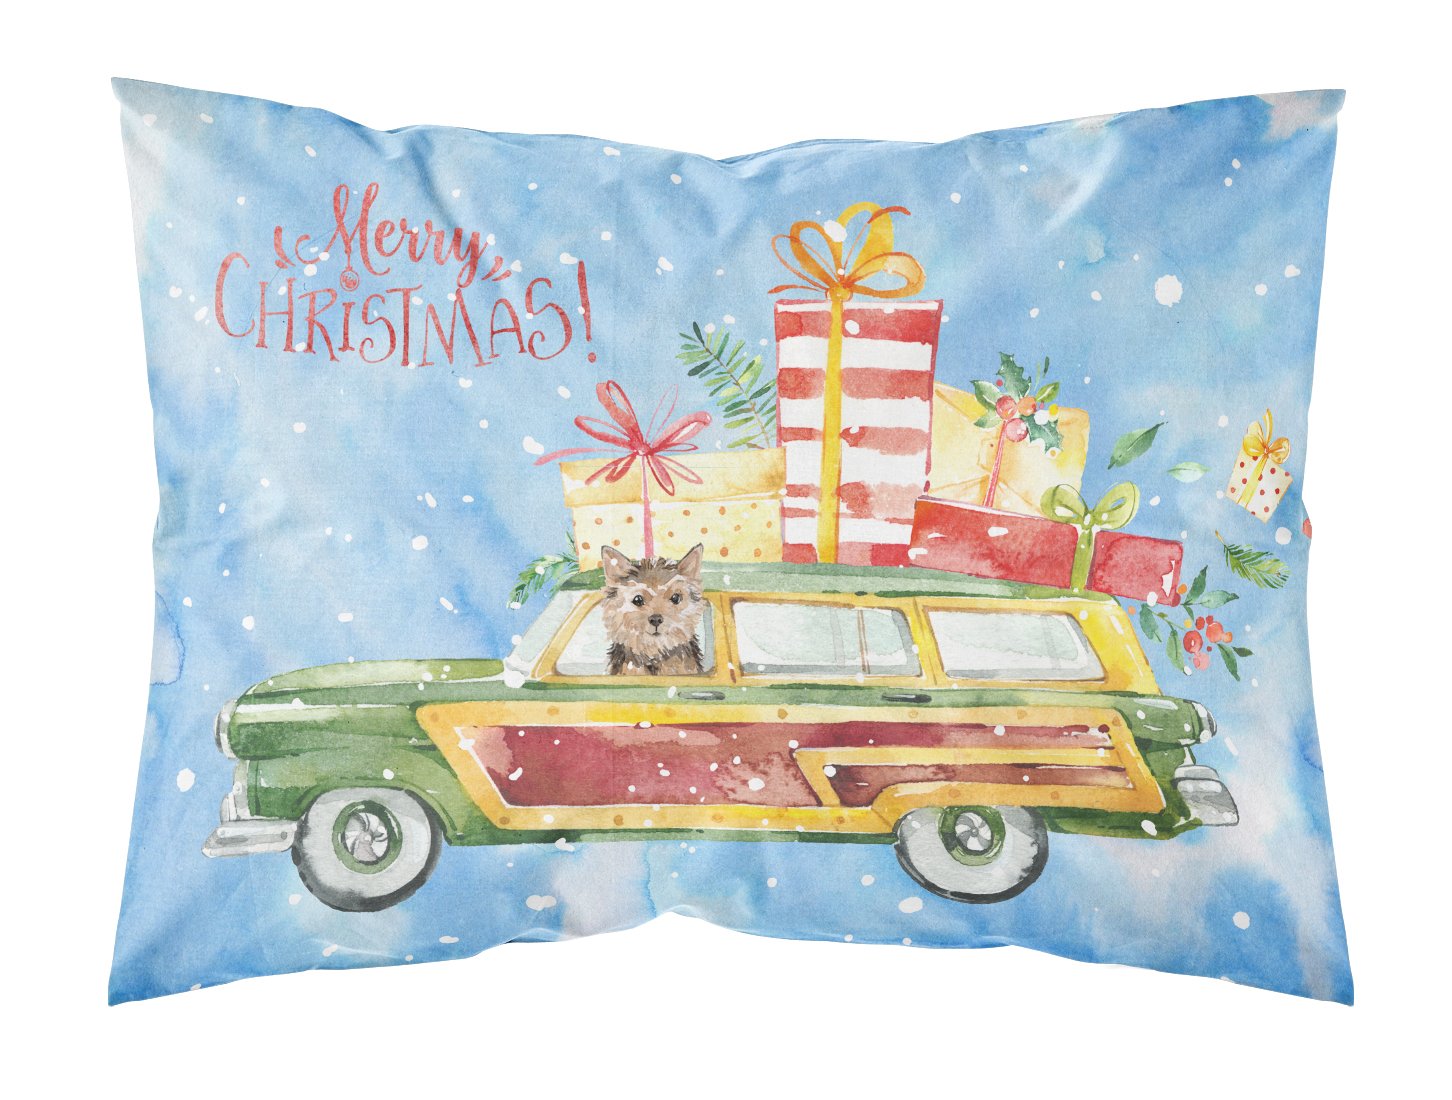 Merry Christmas Norwich Terrier Fabric Standard Pillowcase CK2461PILLOWCASE by Caroline's Treasures